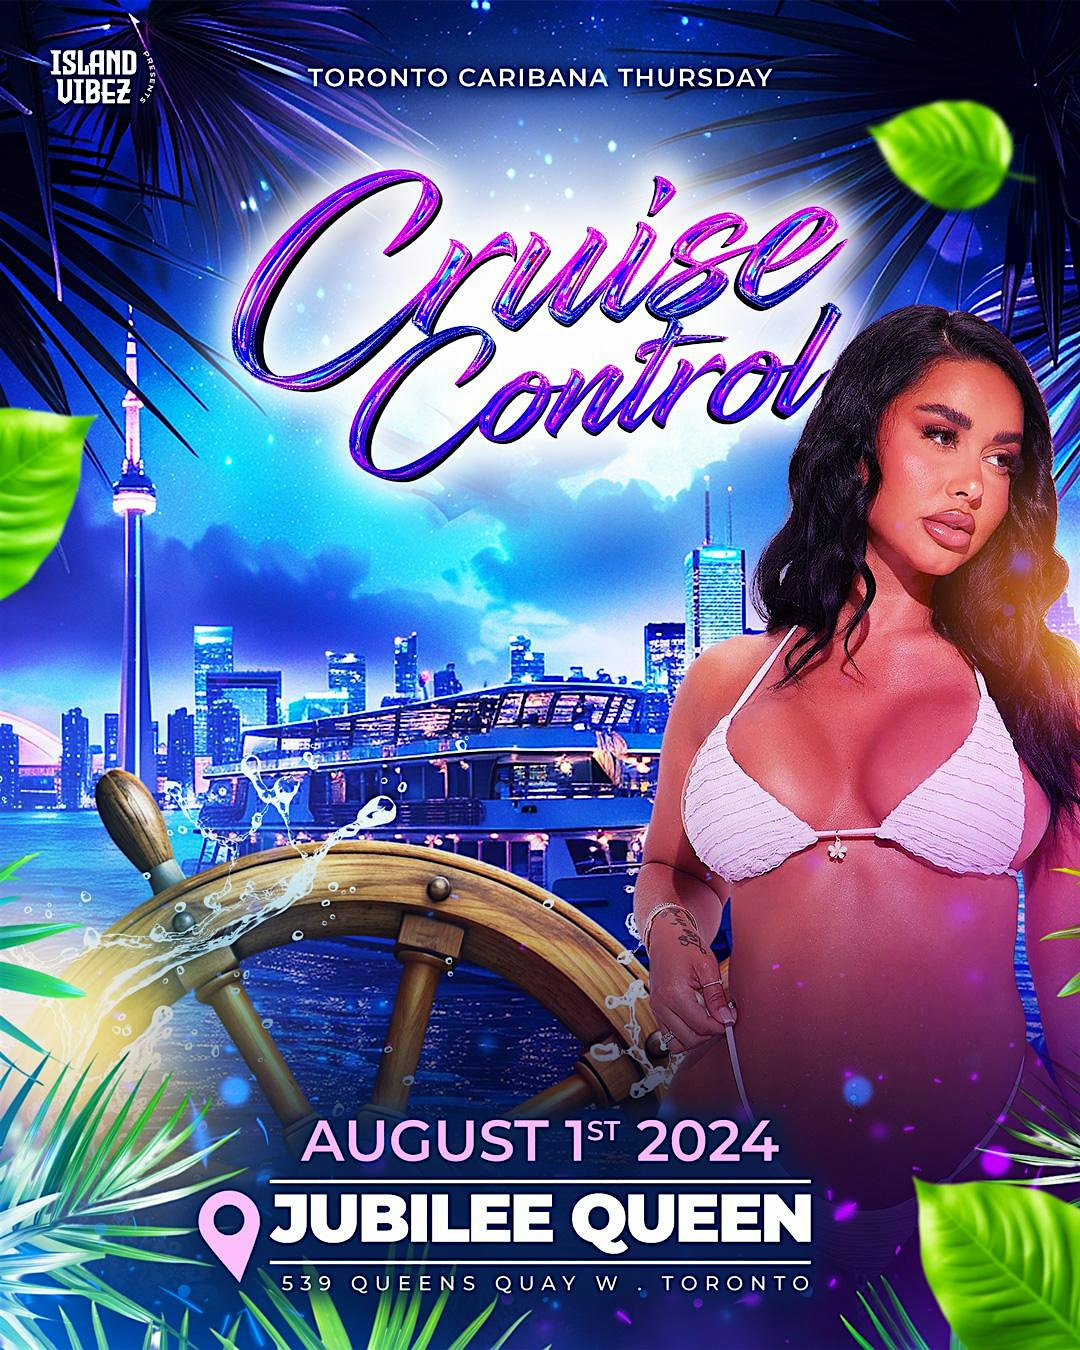 Cruise Control – Caribana Thursday Boat Ride – Toronto, Canada